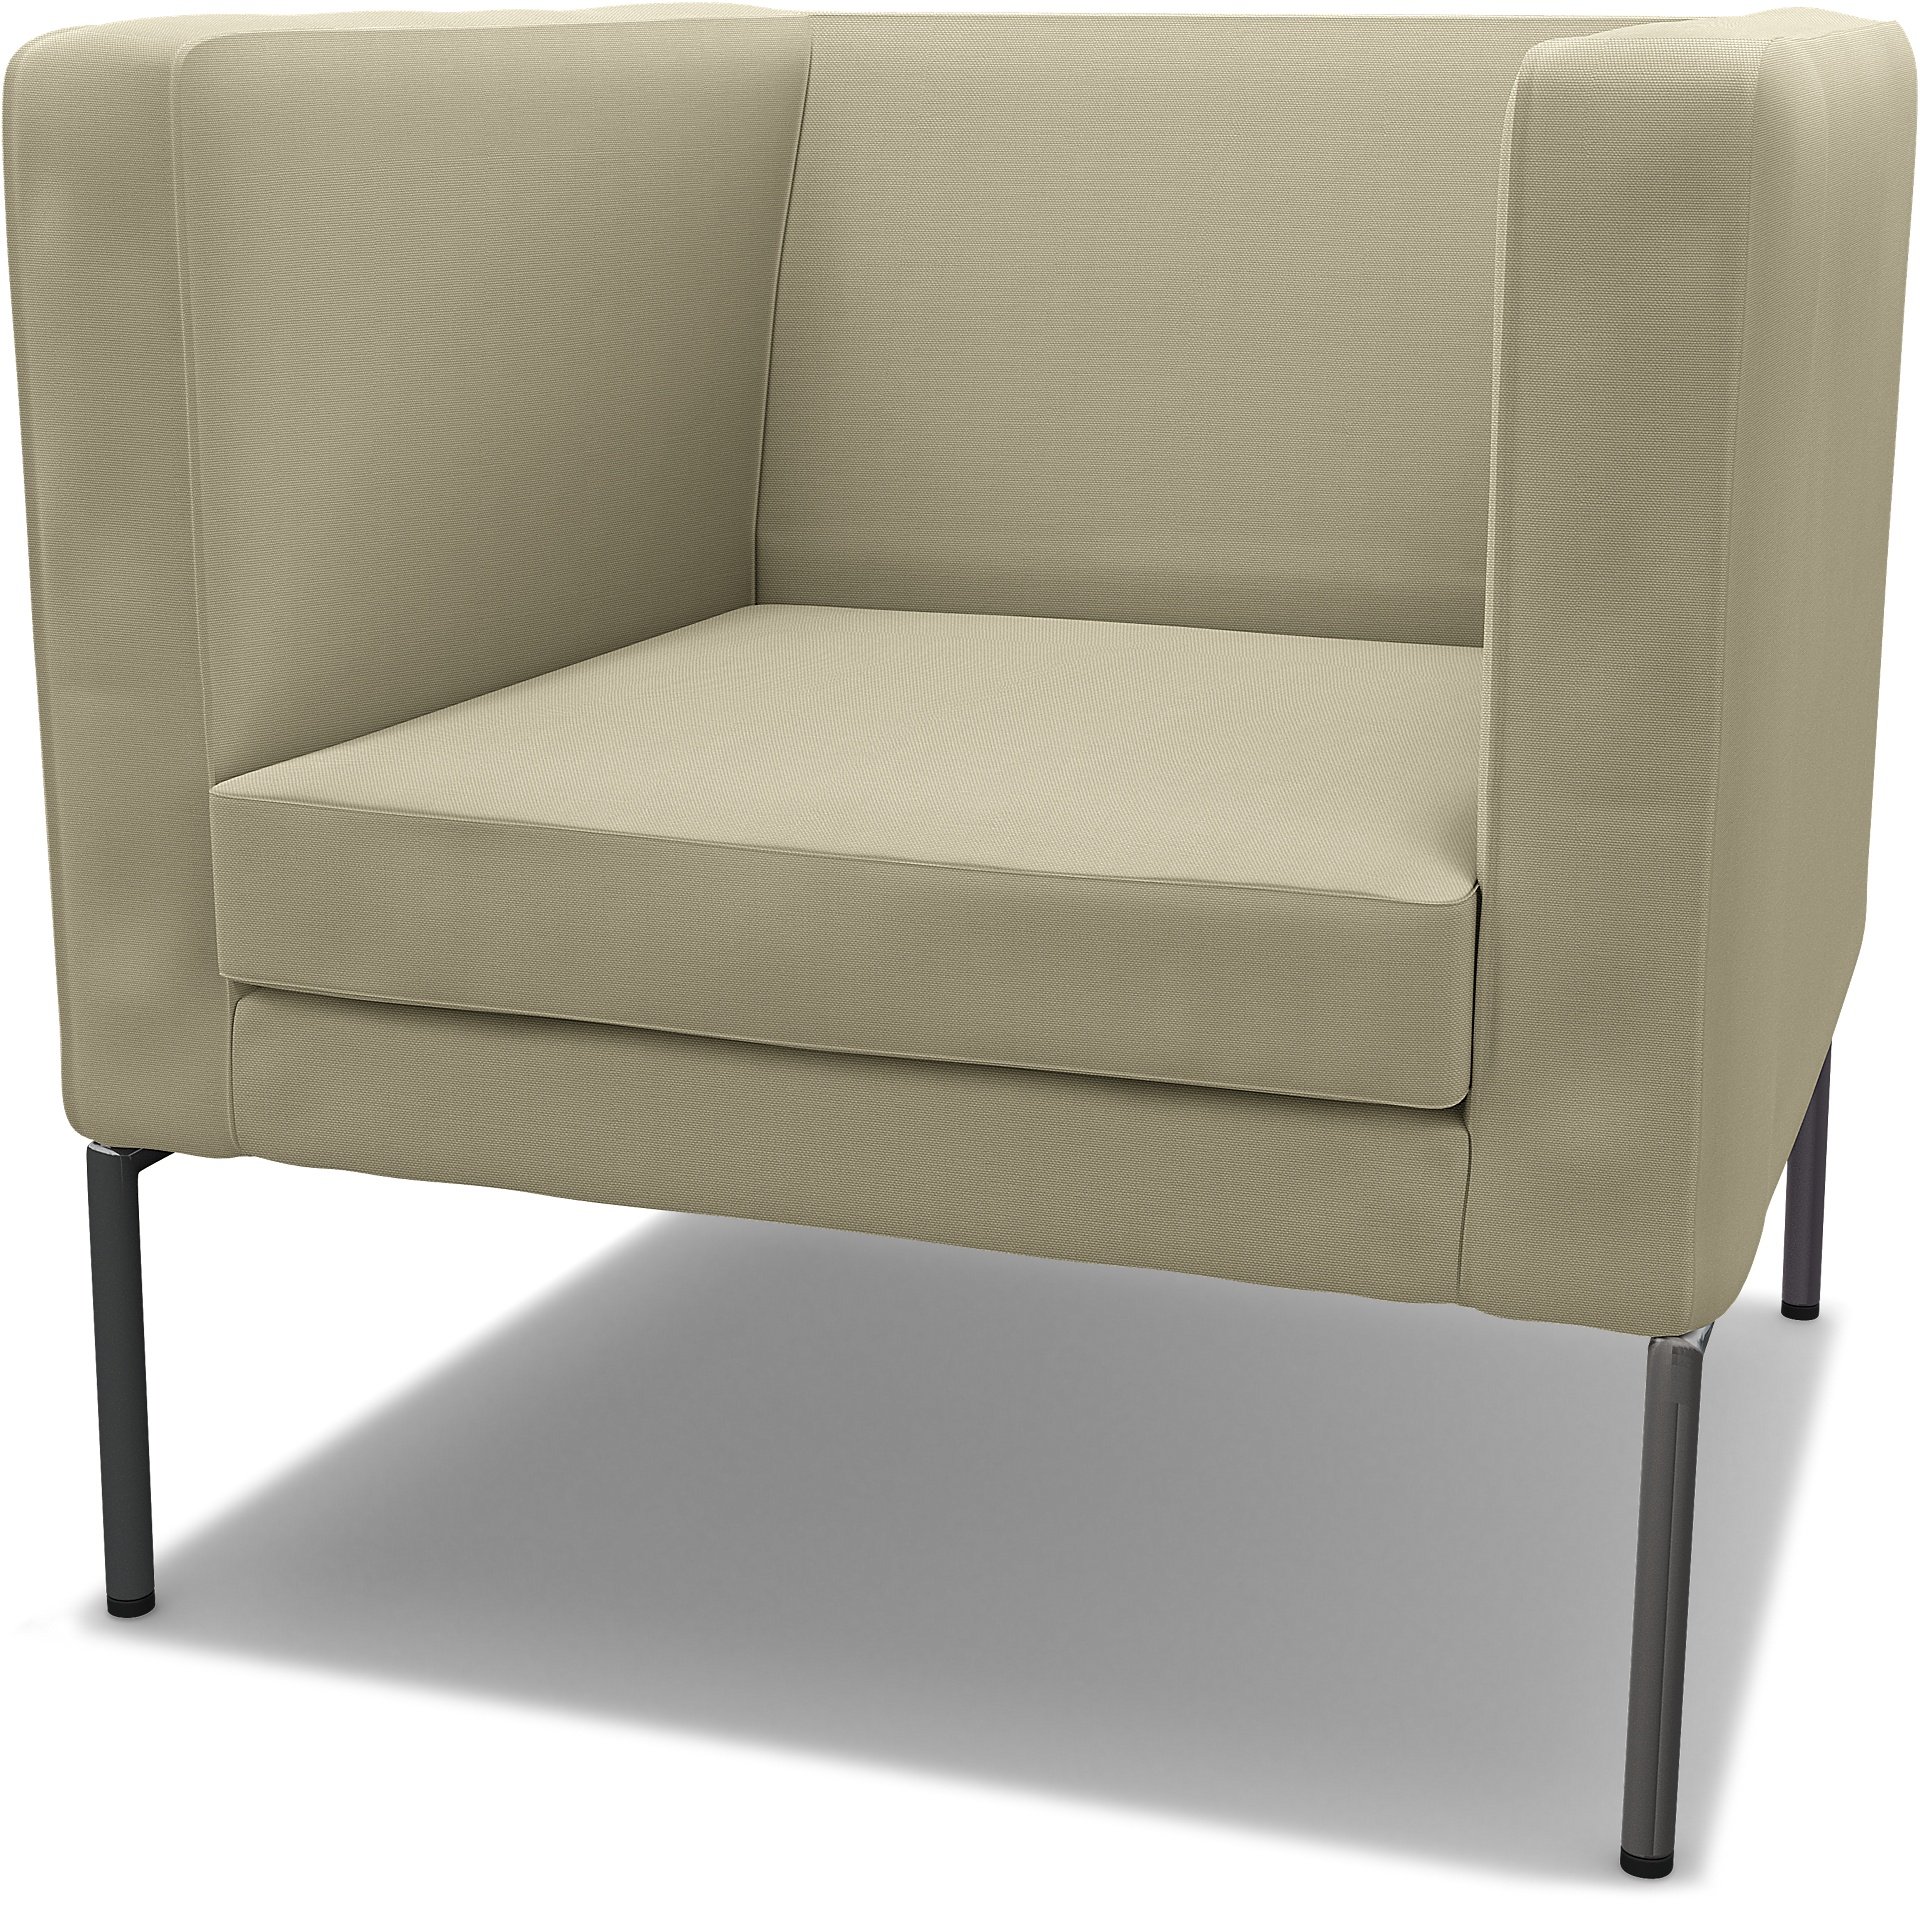 IKEA - Klappsta Armchair Cover, Sand Beige, Cotton - Bemz